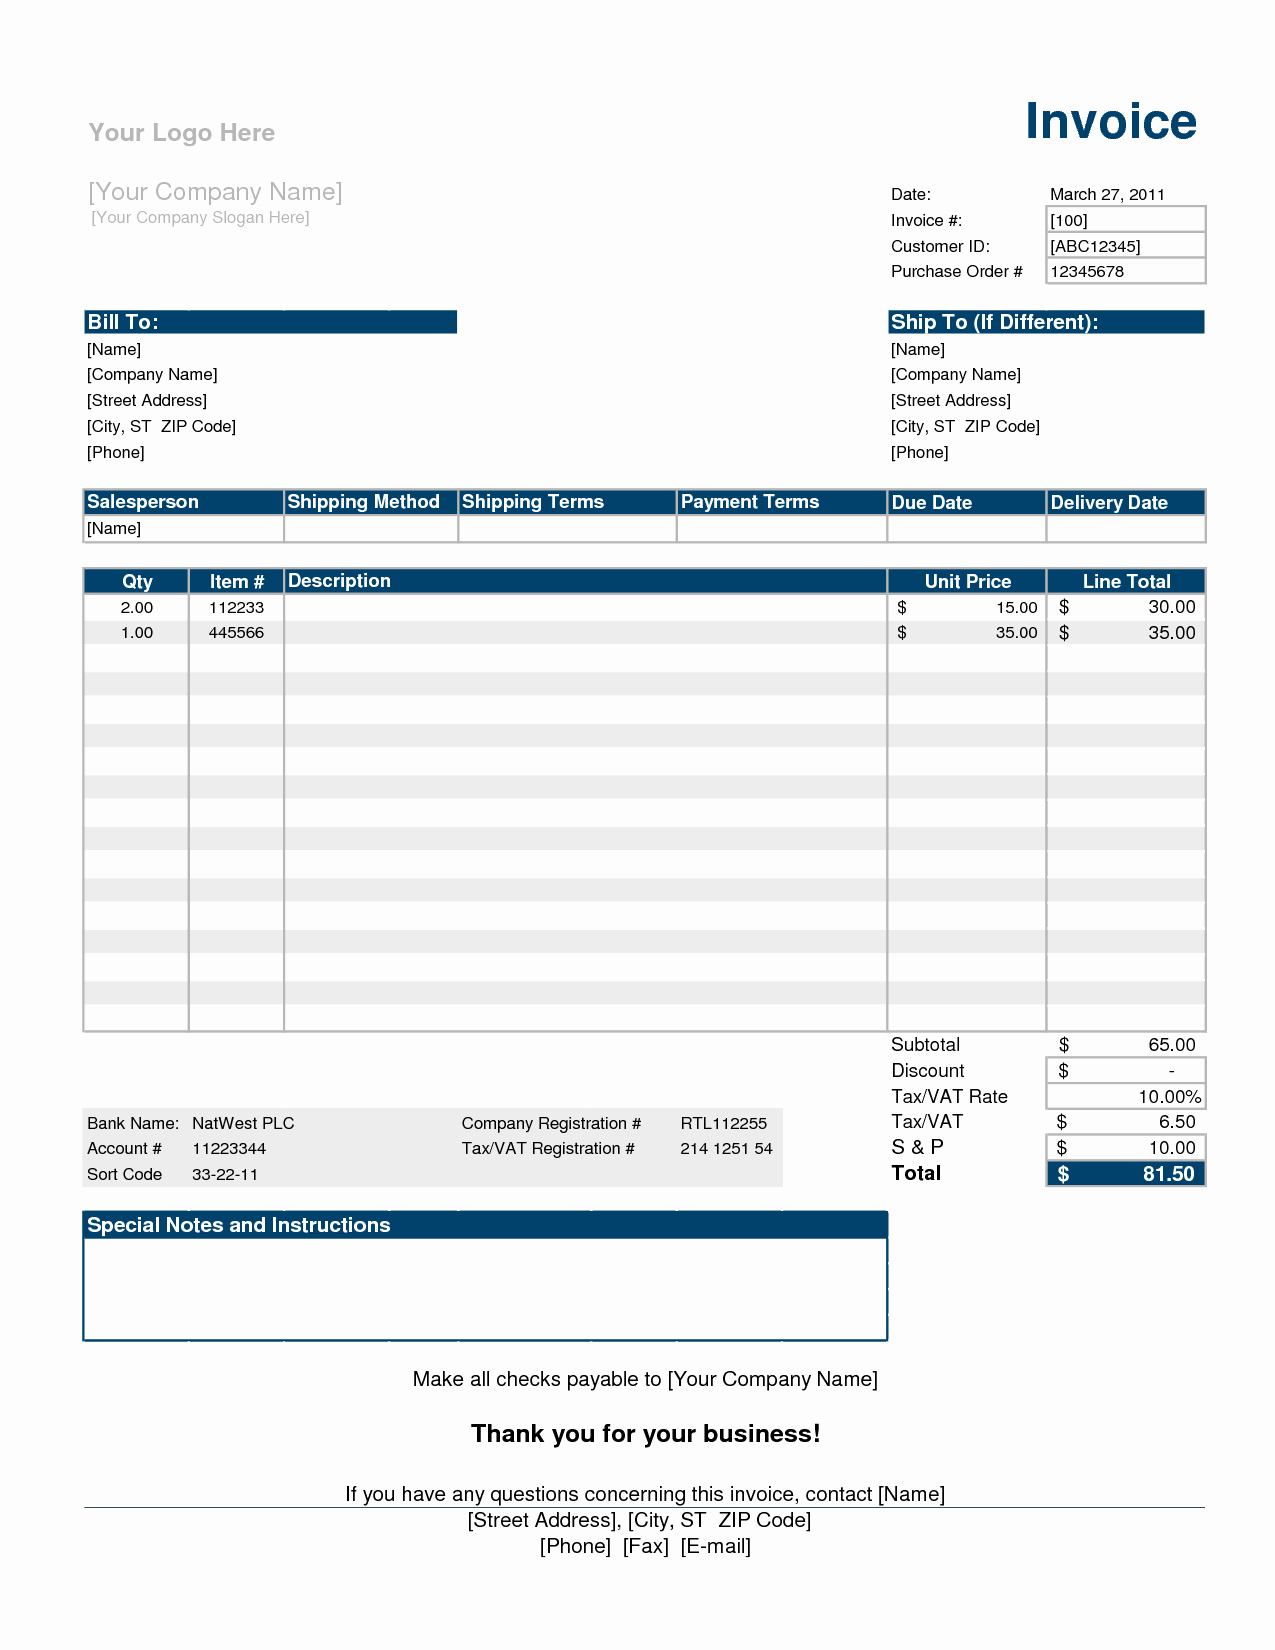 Invoice Spreadsheet Template Free Fresh Invoice Excel Template Spreadsheet Templates for Business